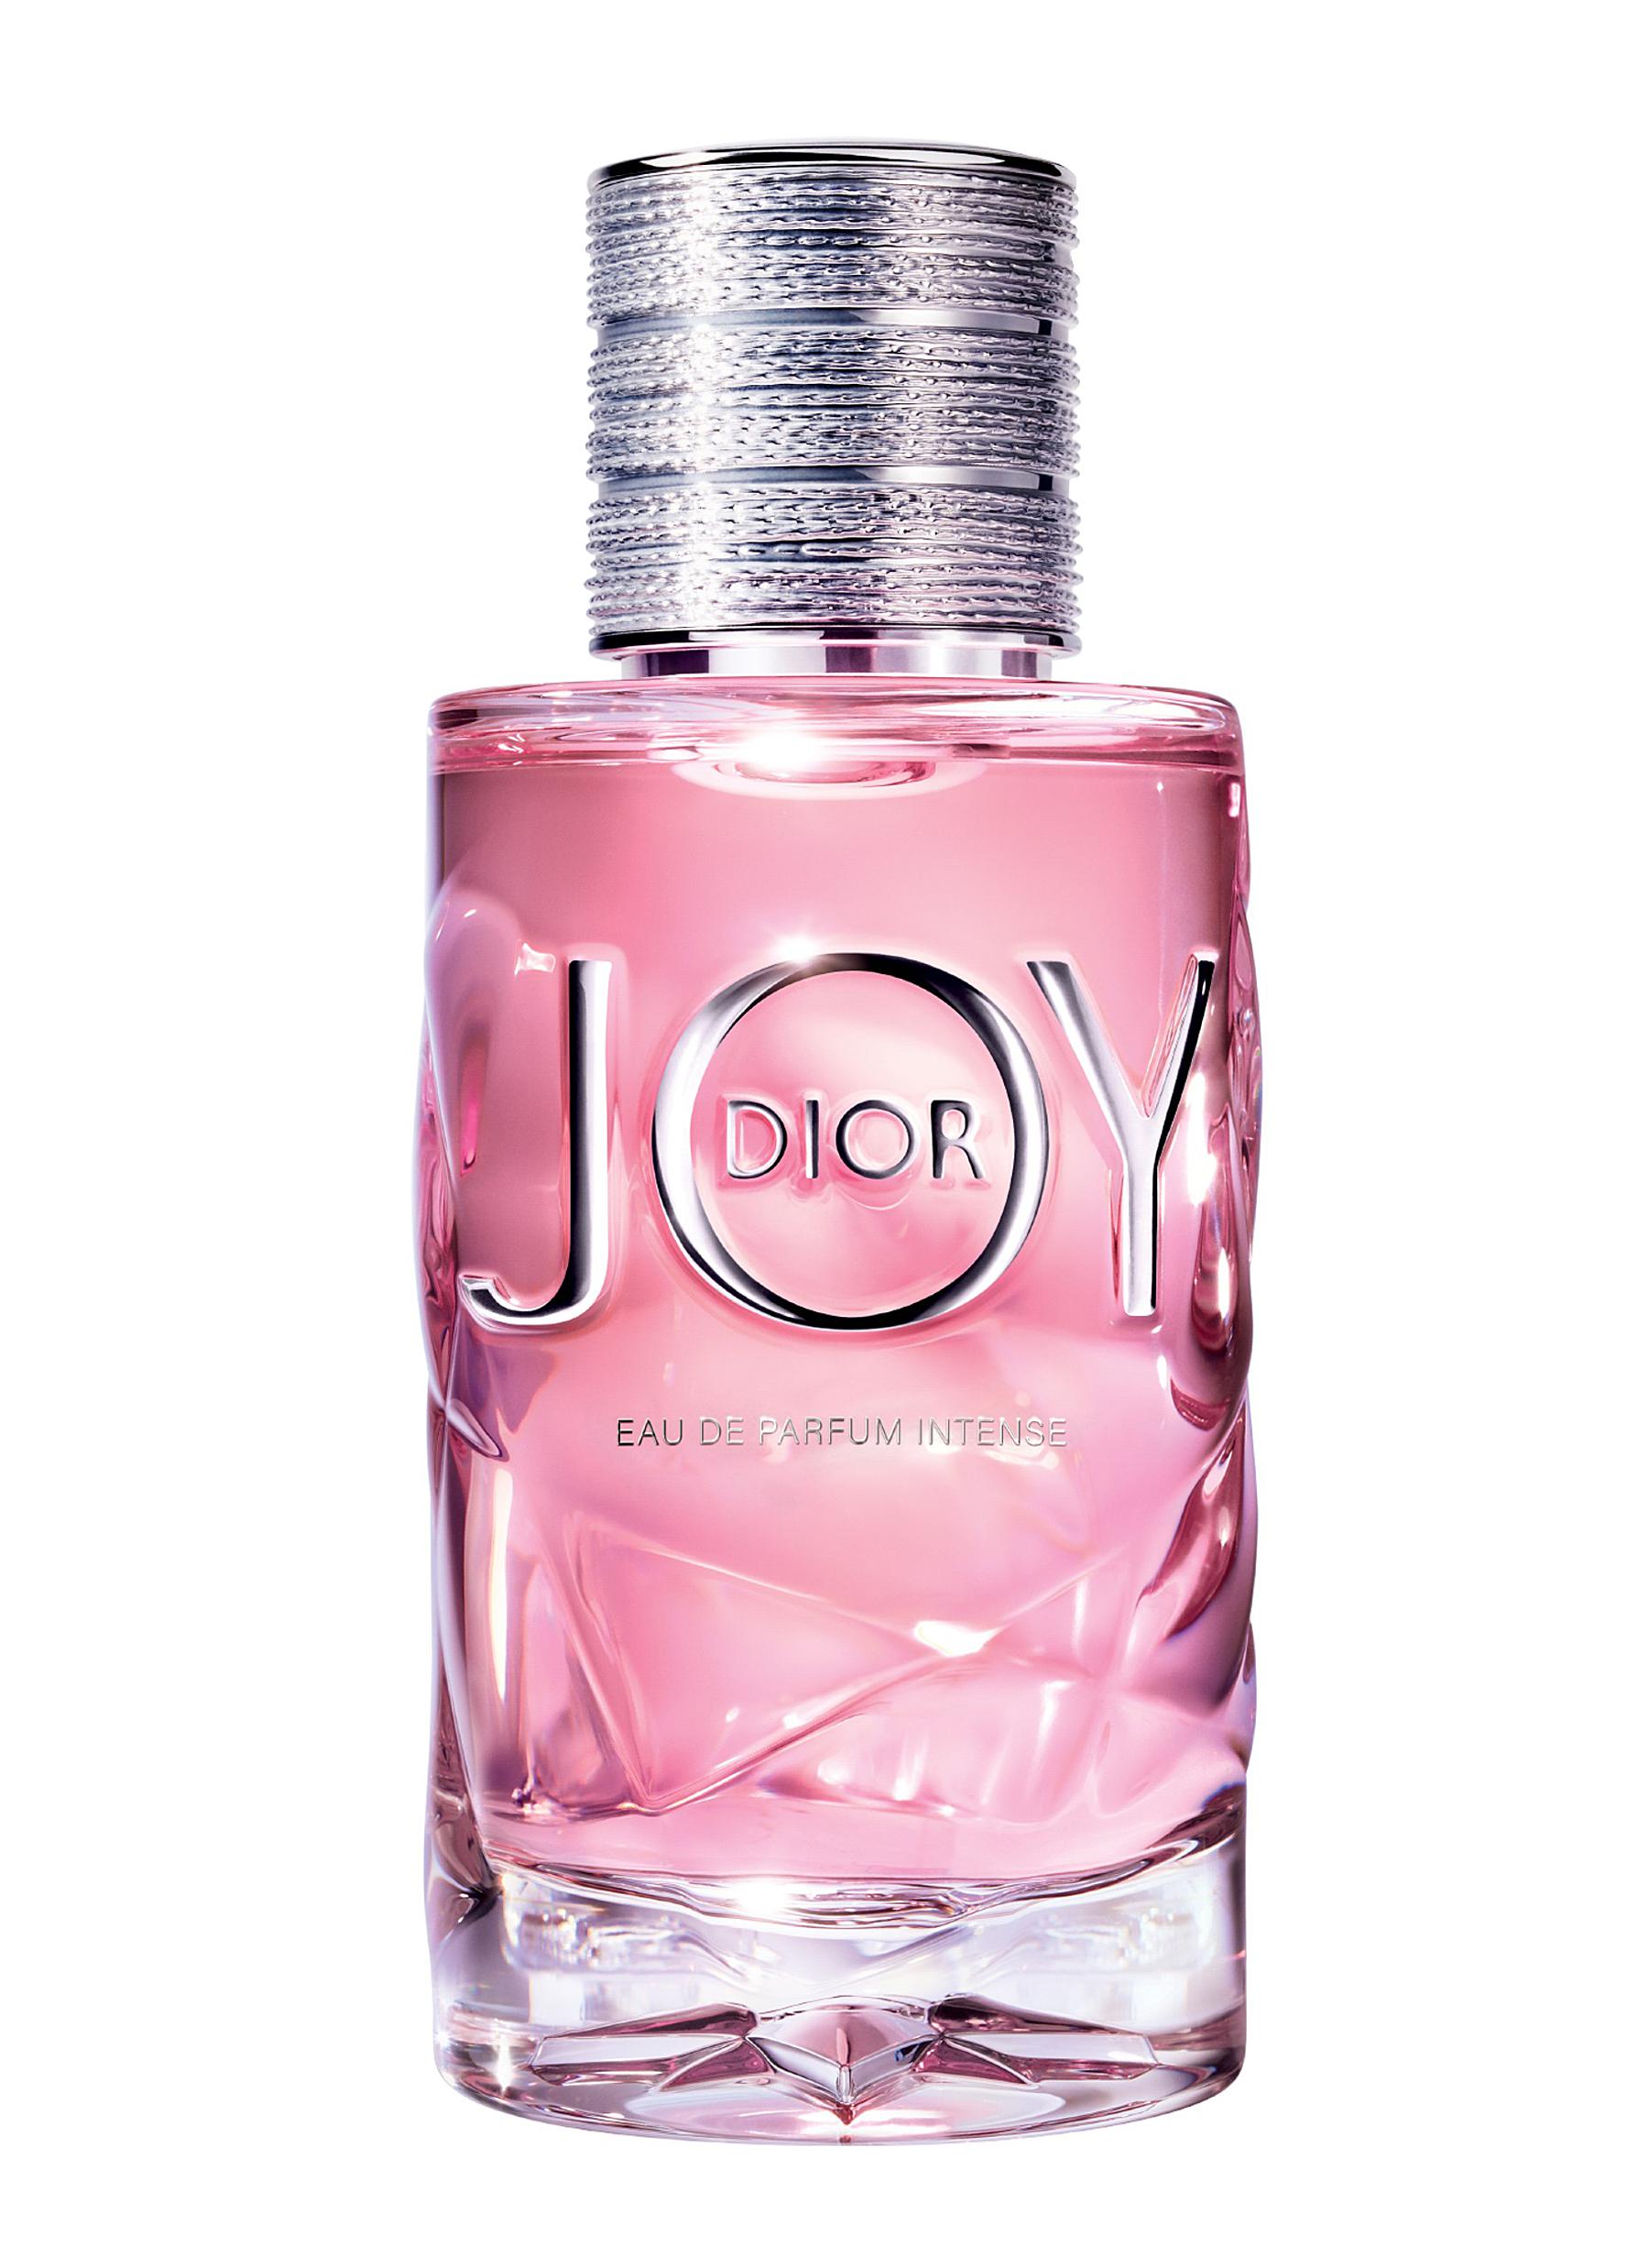 joy perfume 90ml